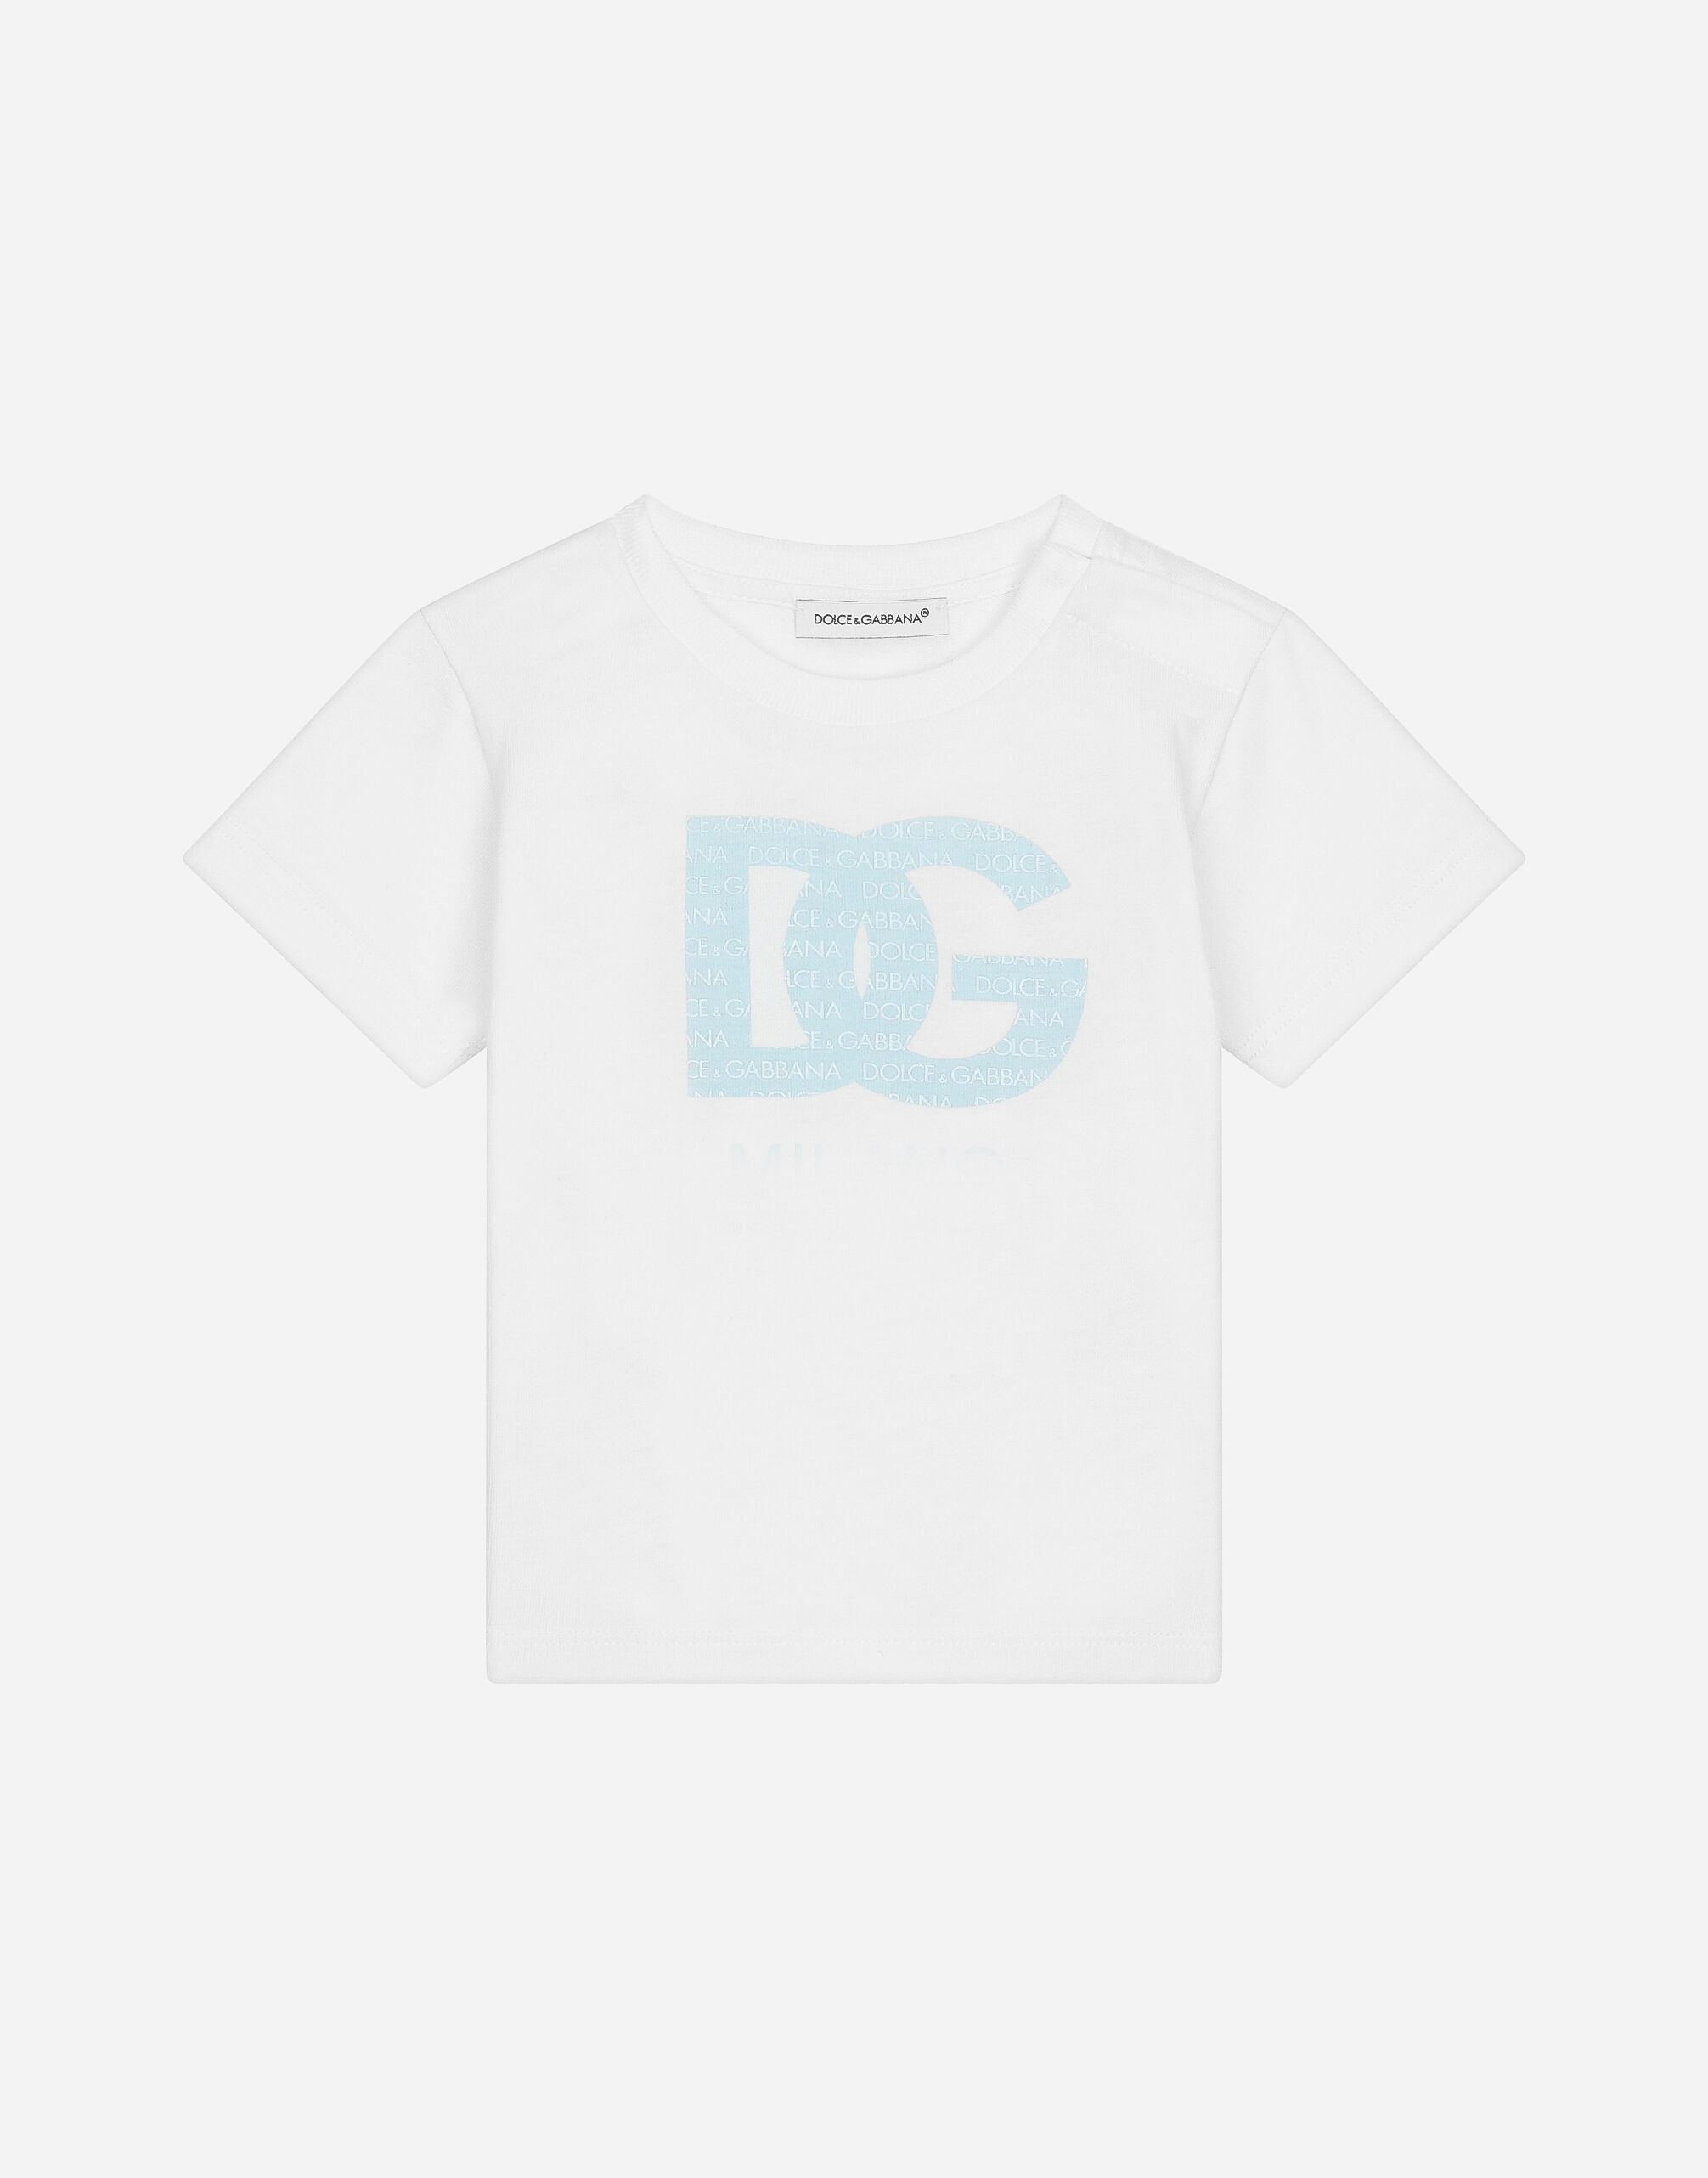 Dolce & Gabbana Jersey T-shirt with DG logo White L1JTEYG7K7R